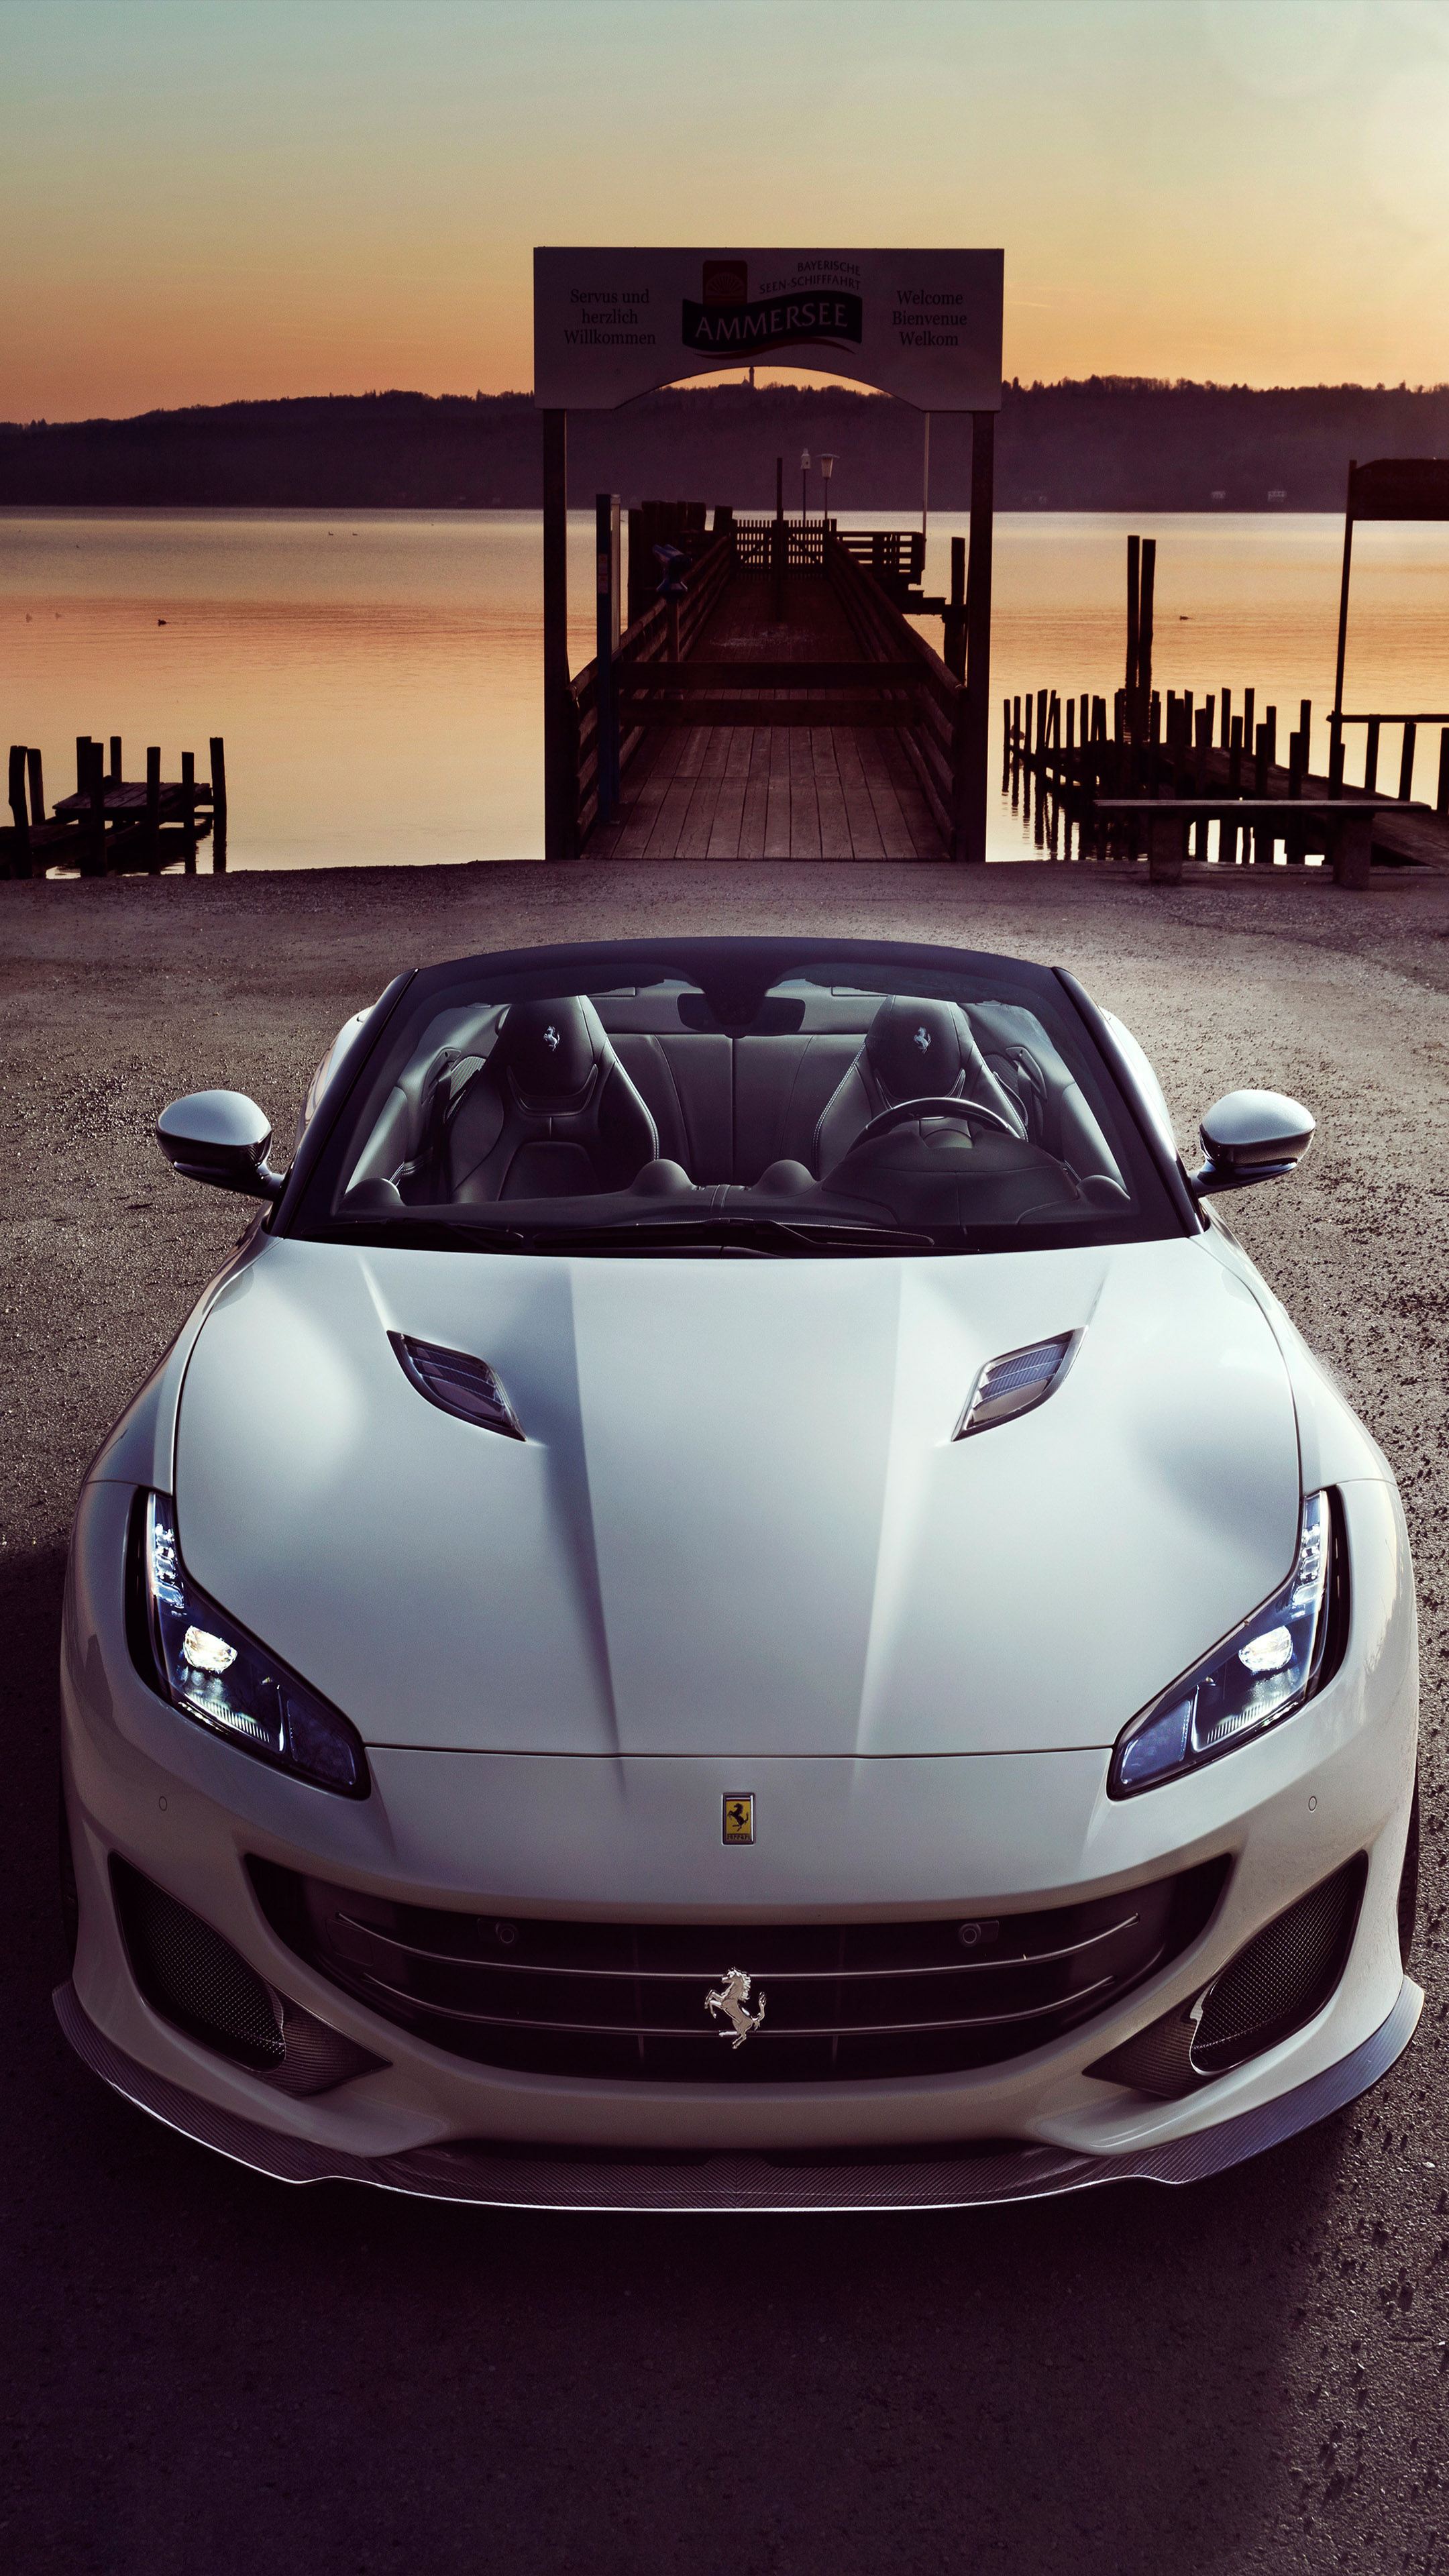 Ferrari Portofino M, 2021 magnificent beauty, Automotive artistry, Racing heritage, 2160x3840 4K Phone